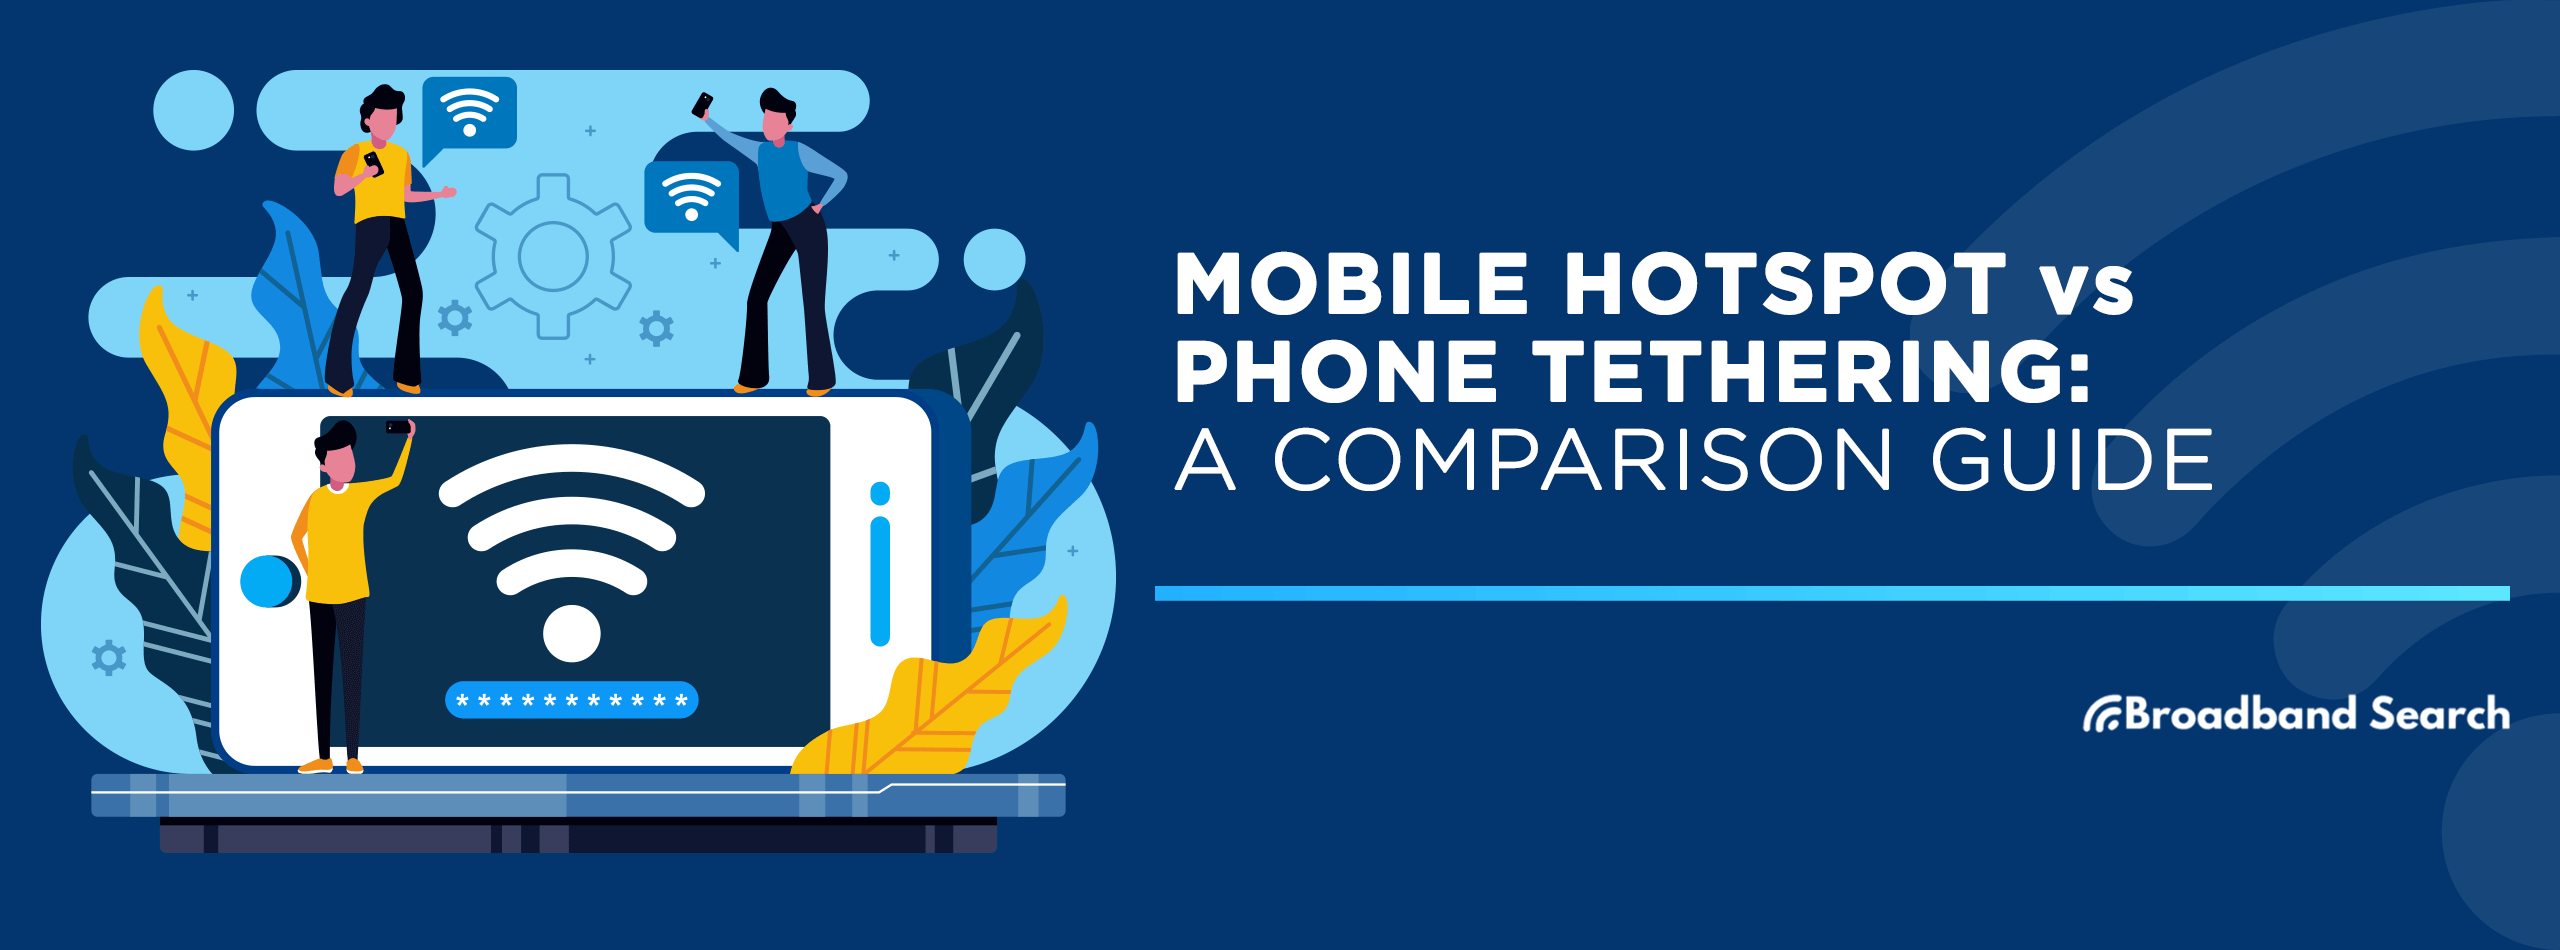 Mobile Hotspot vs Phone Tethering: A Comparison Guide